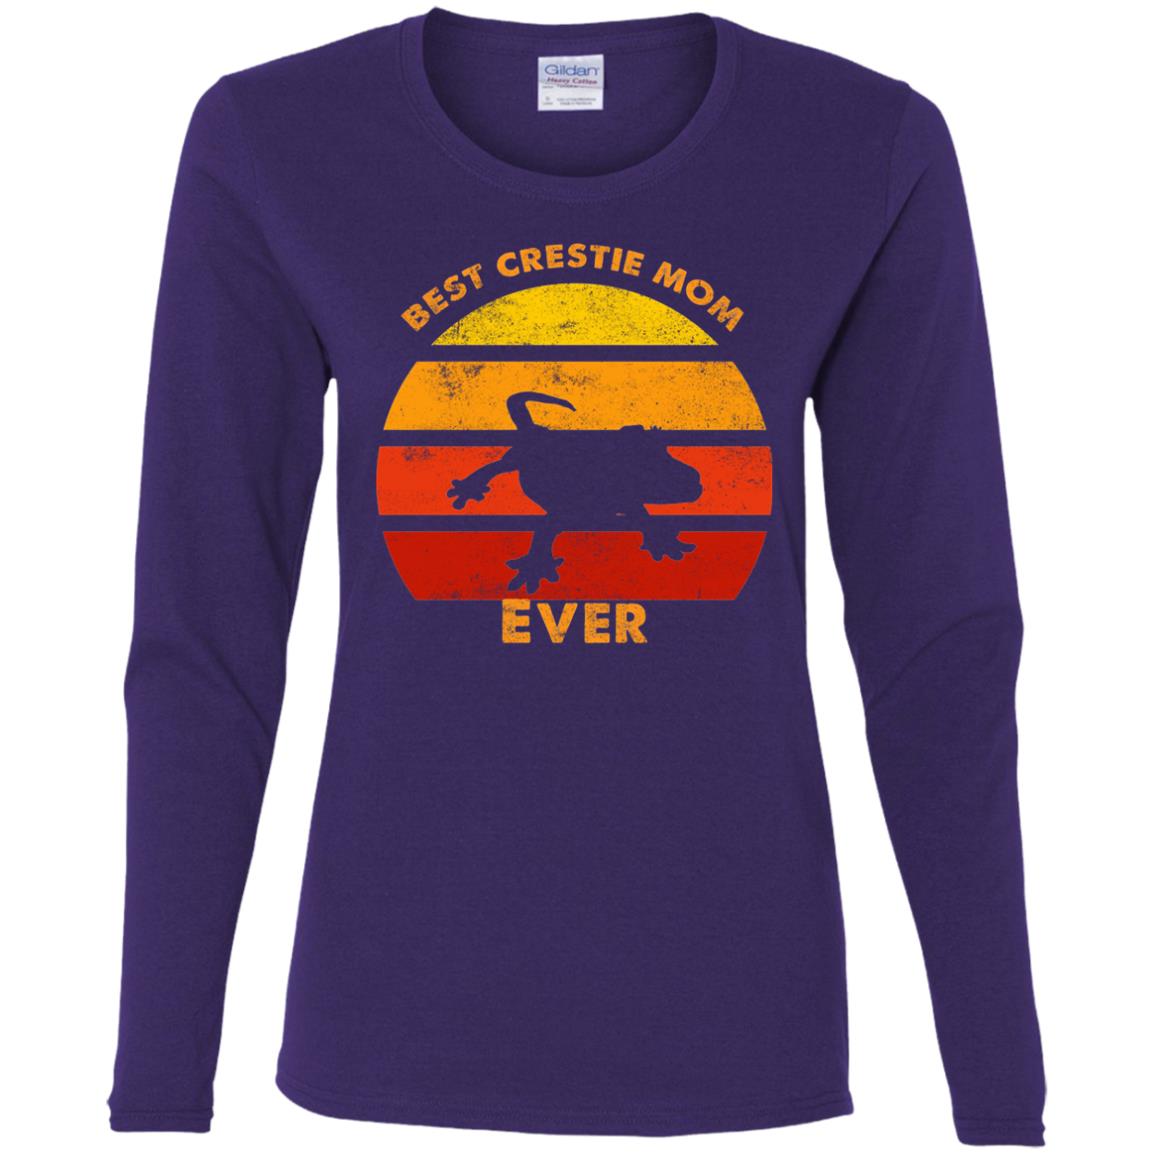 Best Crestie Mom Ever - Womens Longsleeved T-Shirt